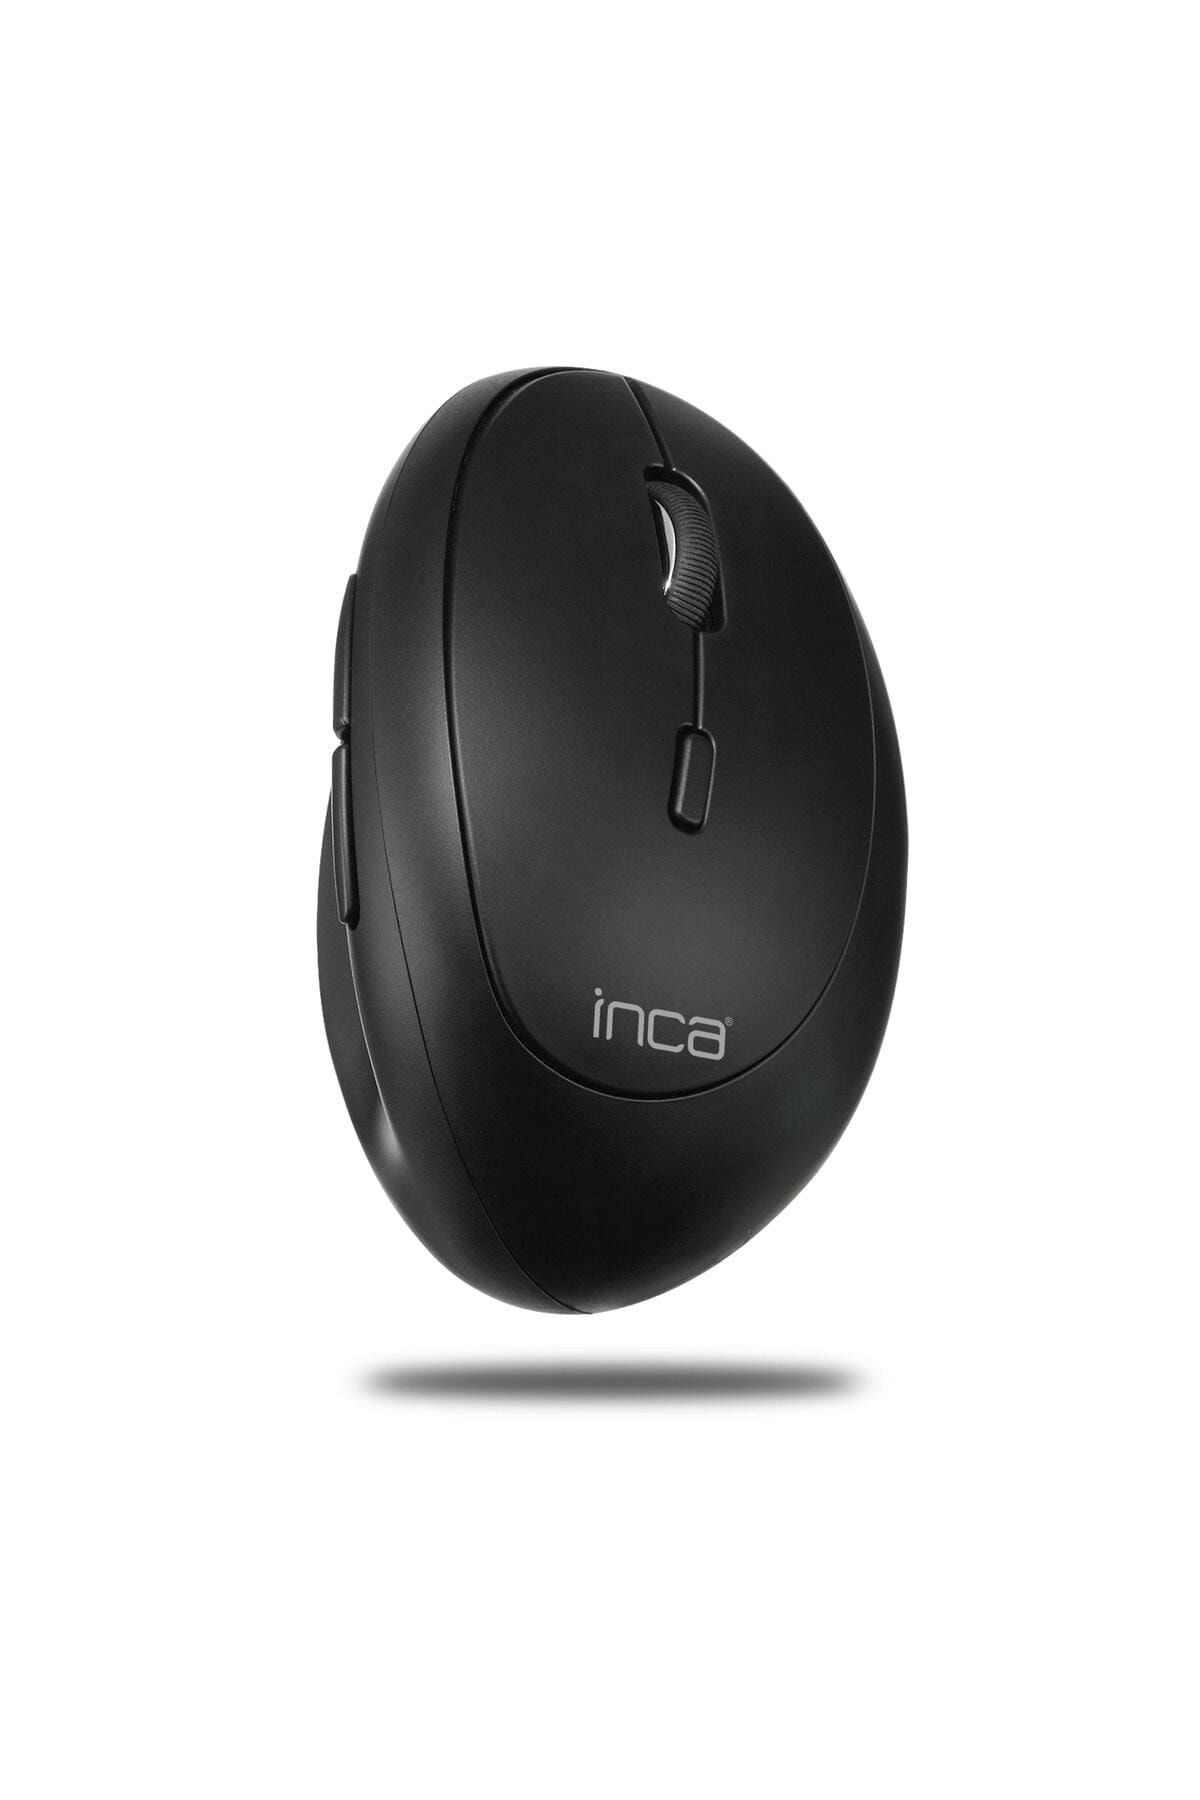 Inca Iwm-325 Wireless Mouse 1600 Dpı